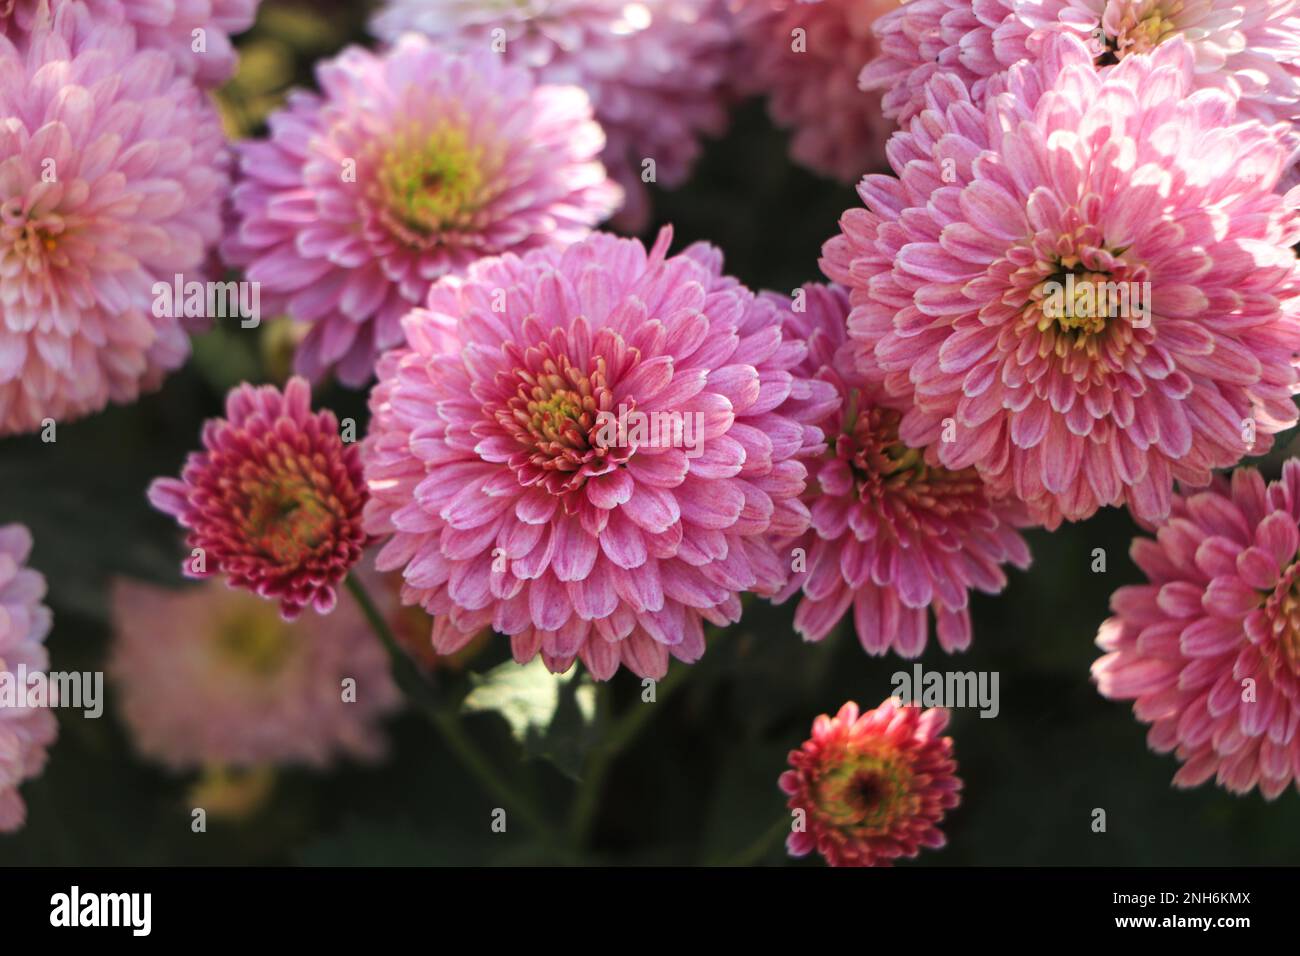 Autumn flower chrysanthemum blooming in garden Stock Photo